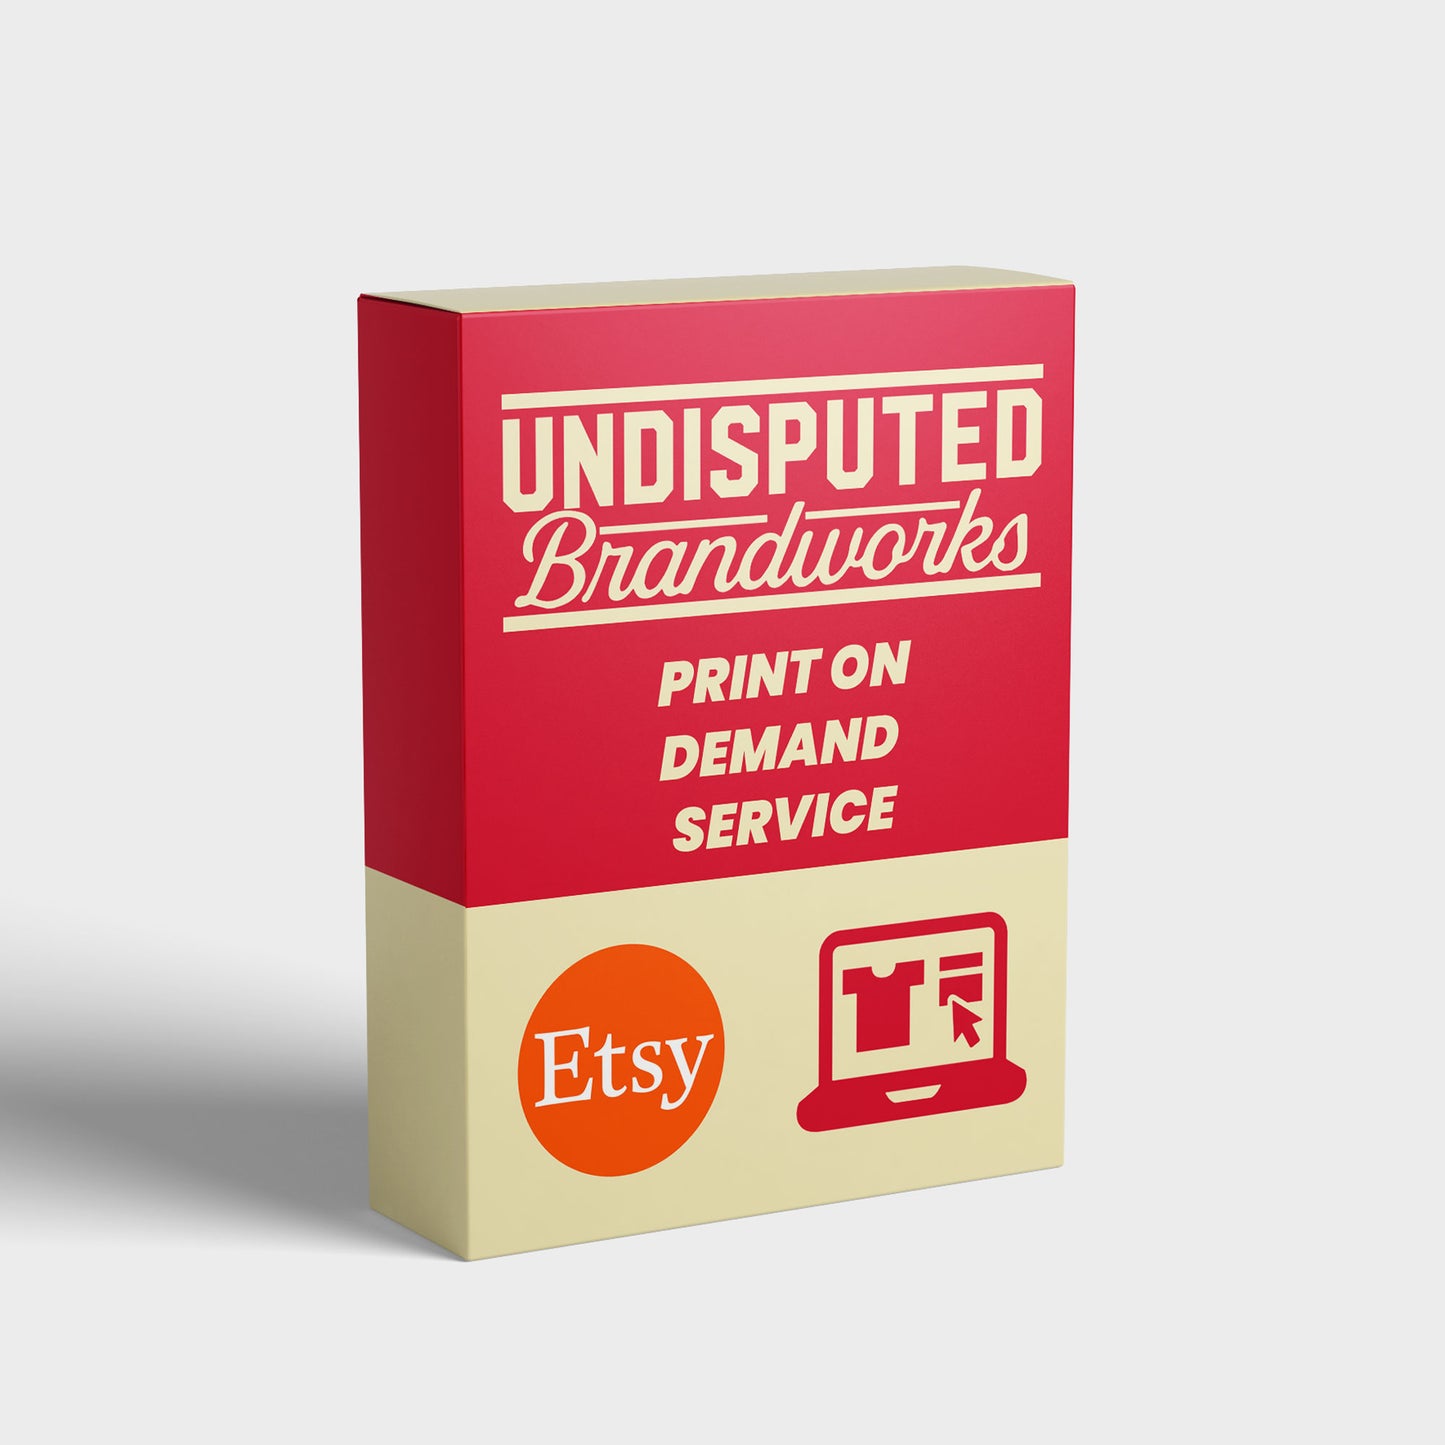 etsy print on demand setup by undisputed brandworks